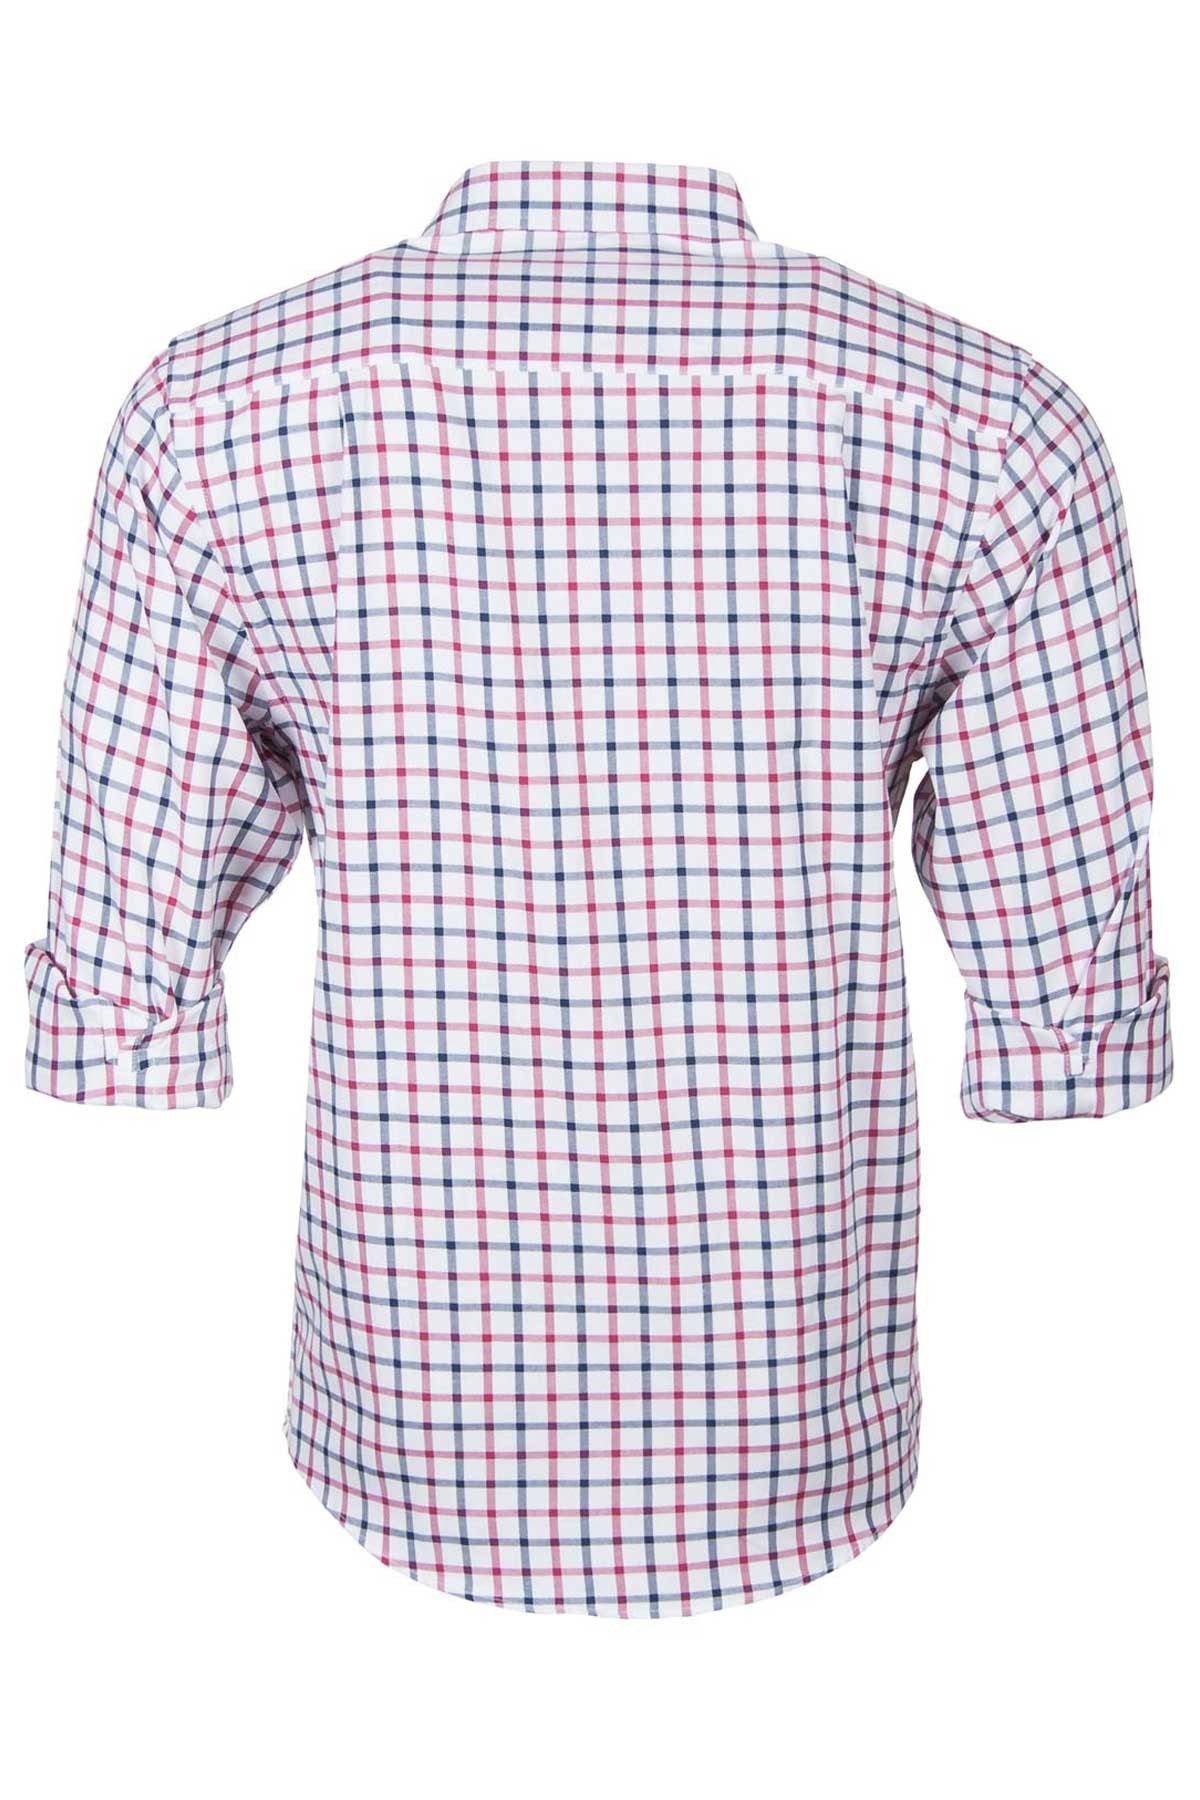 Mens Country Check Shirts UK | Long Sleeved Shirts | Rydale